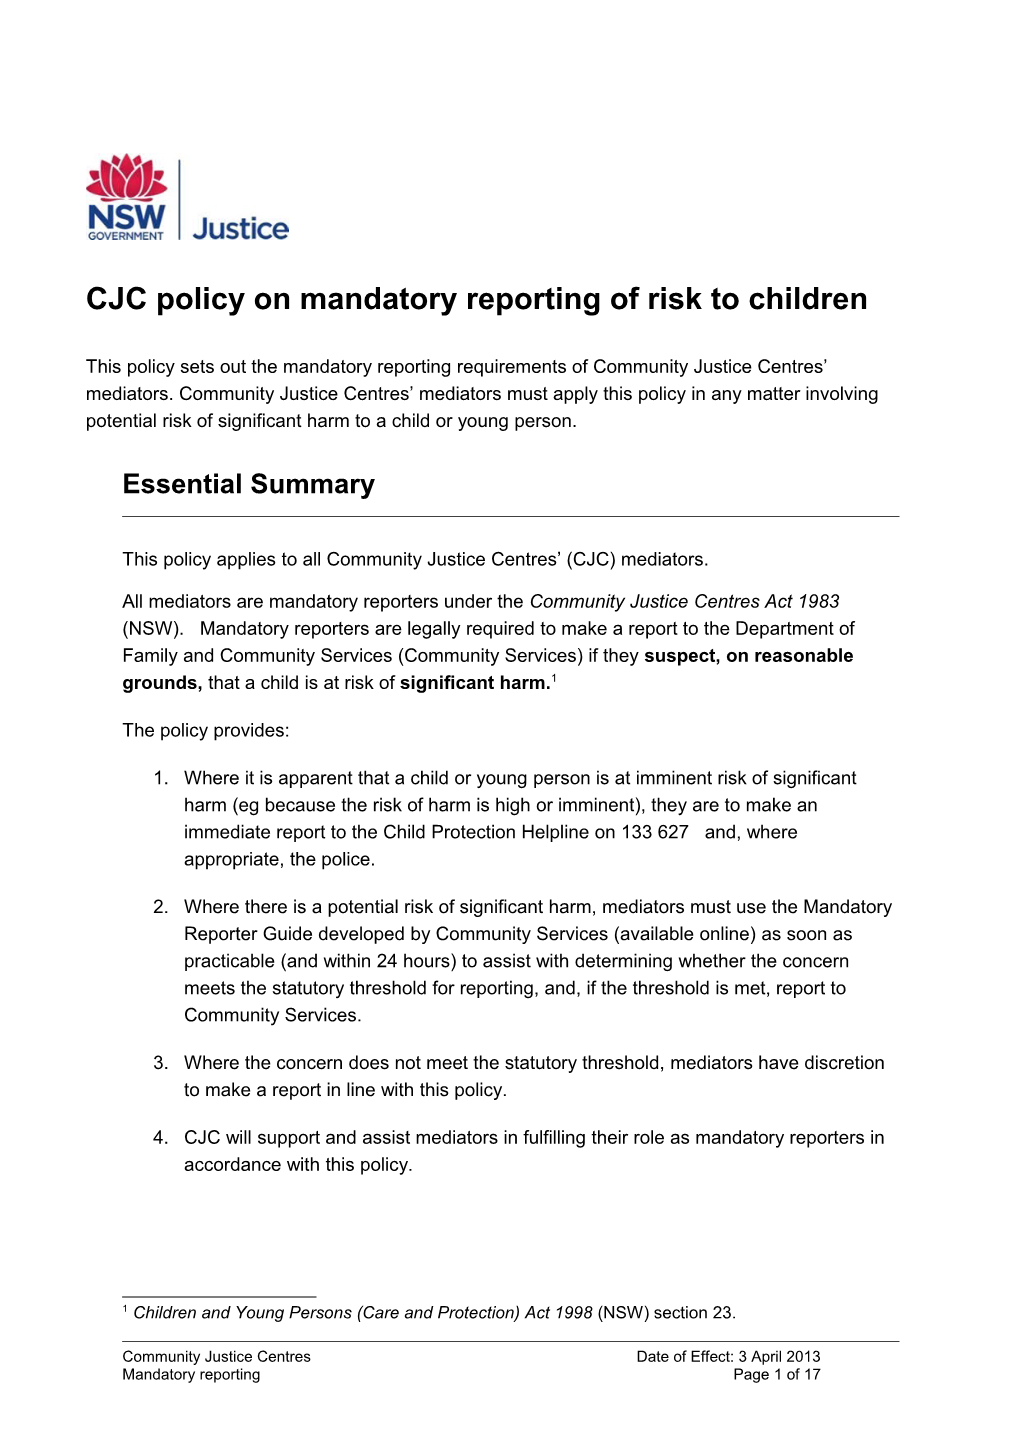 CJC Policy - Mandatory Reporting